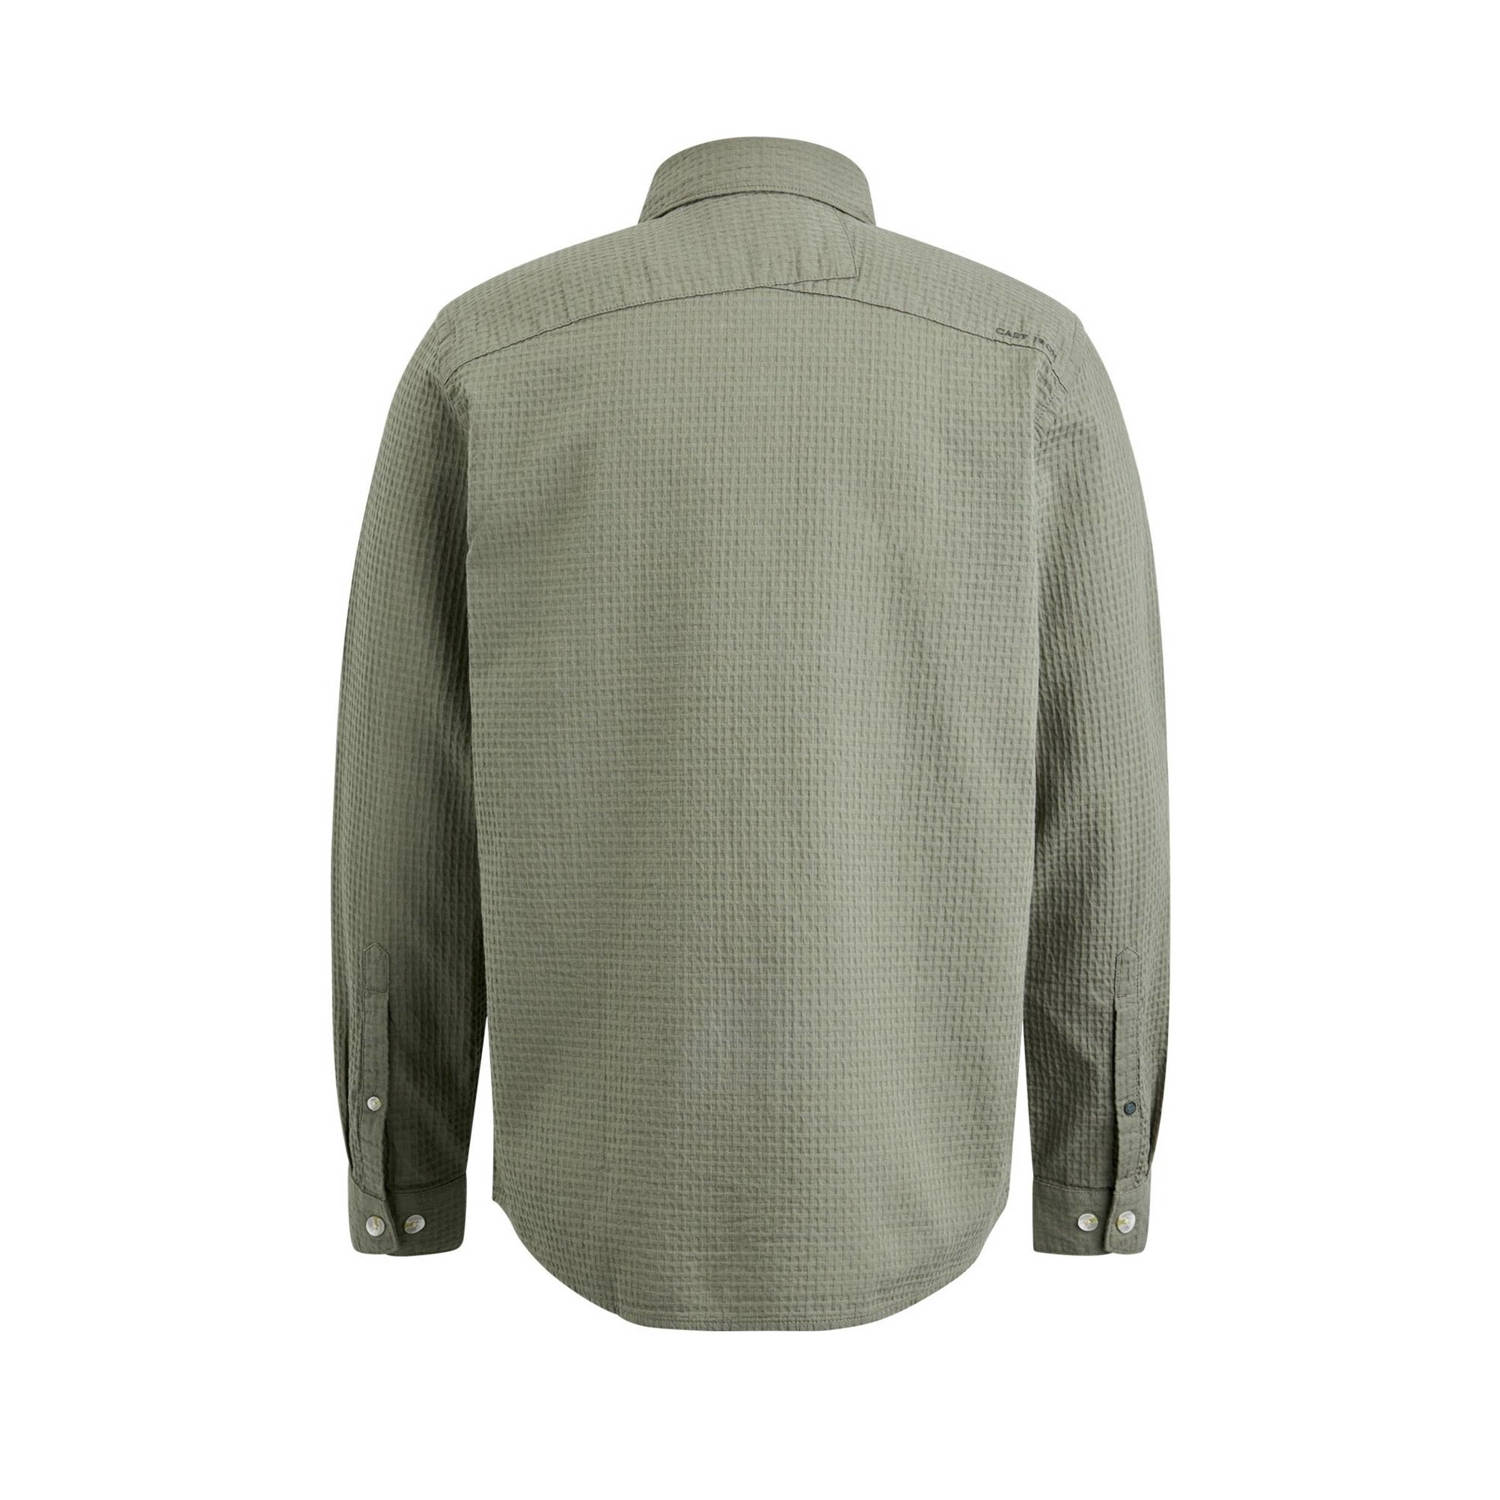 Cast Iron slim fit overhemd 6495 groen